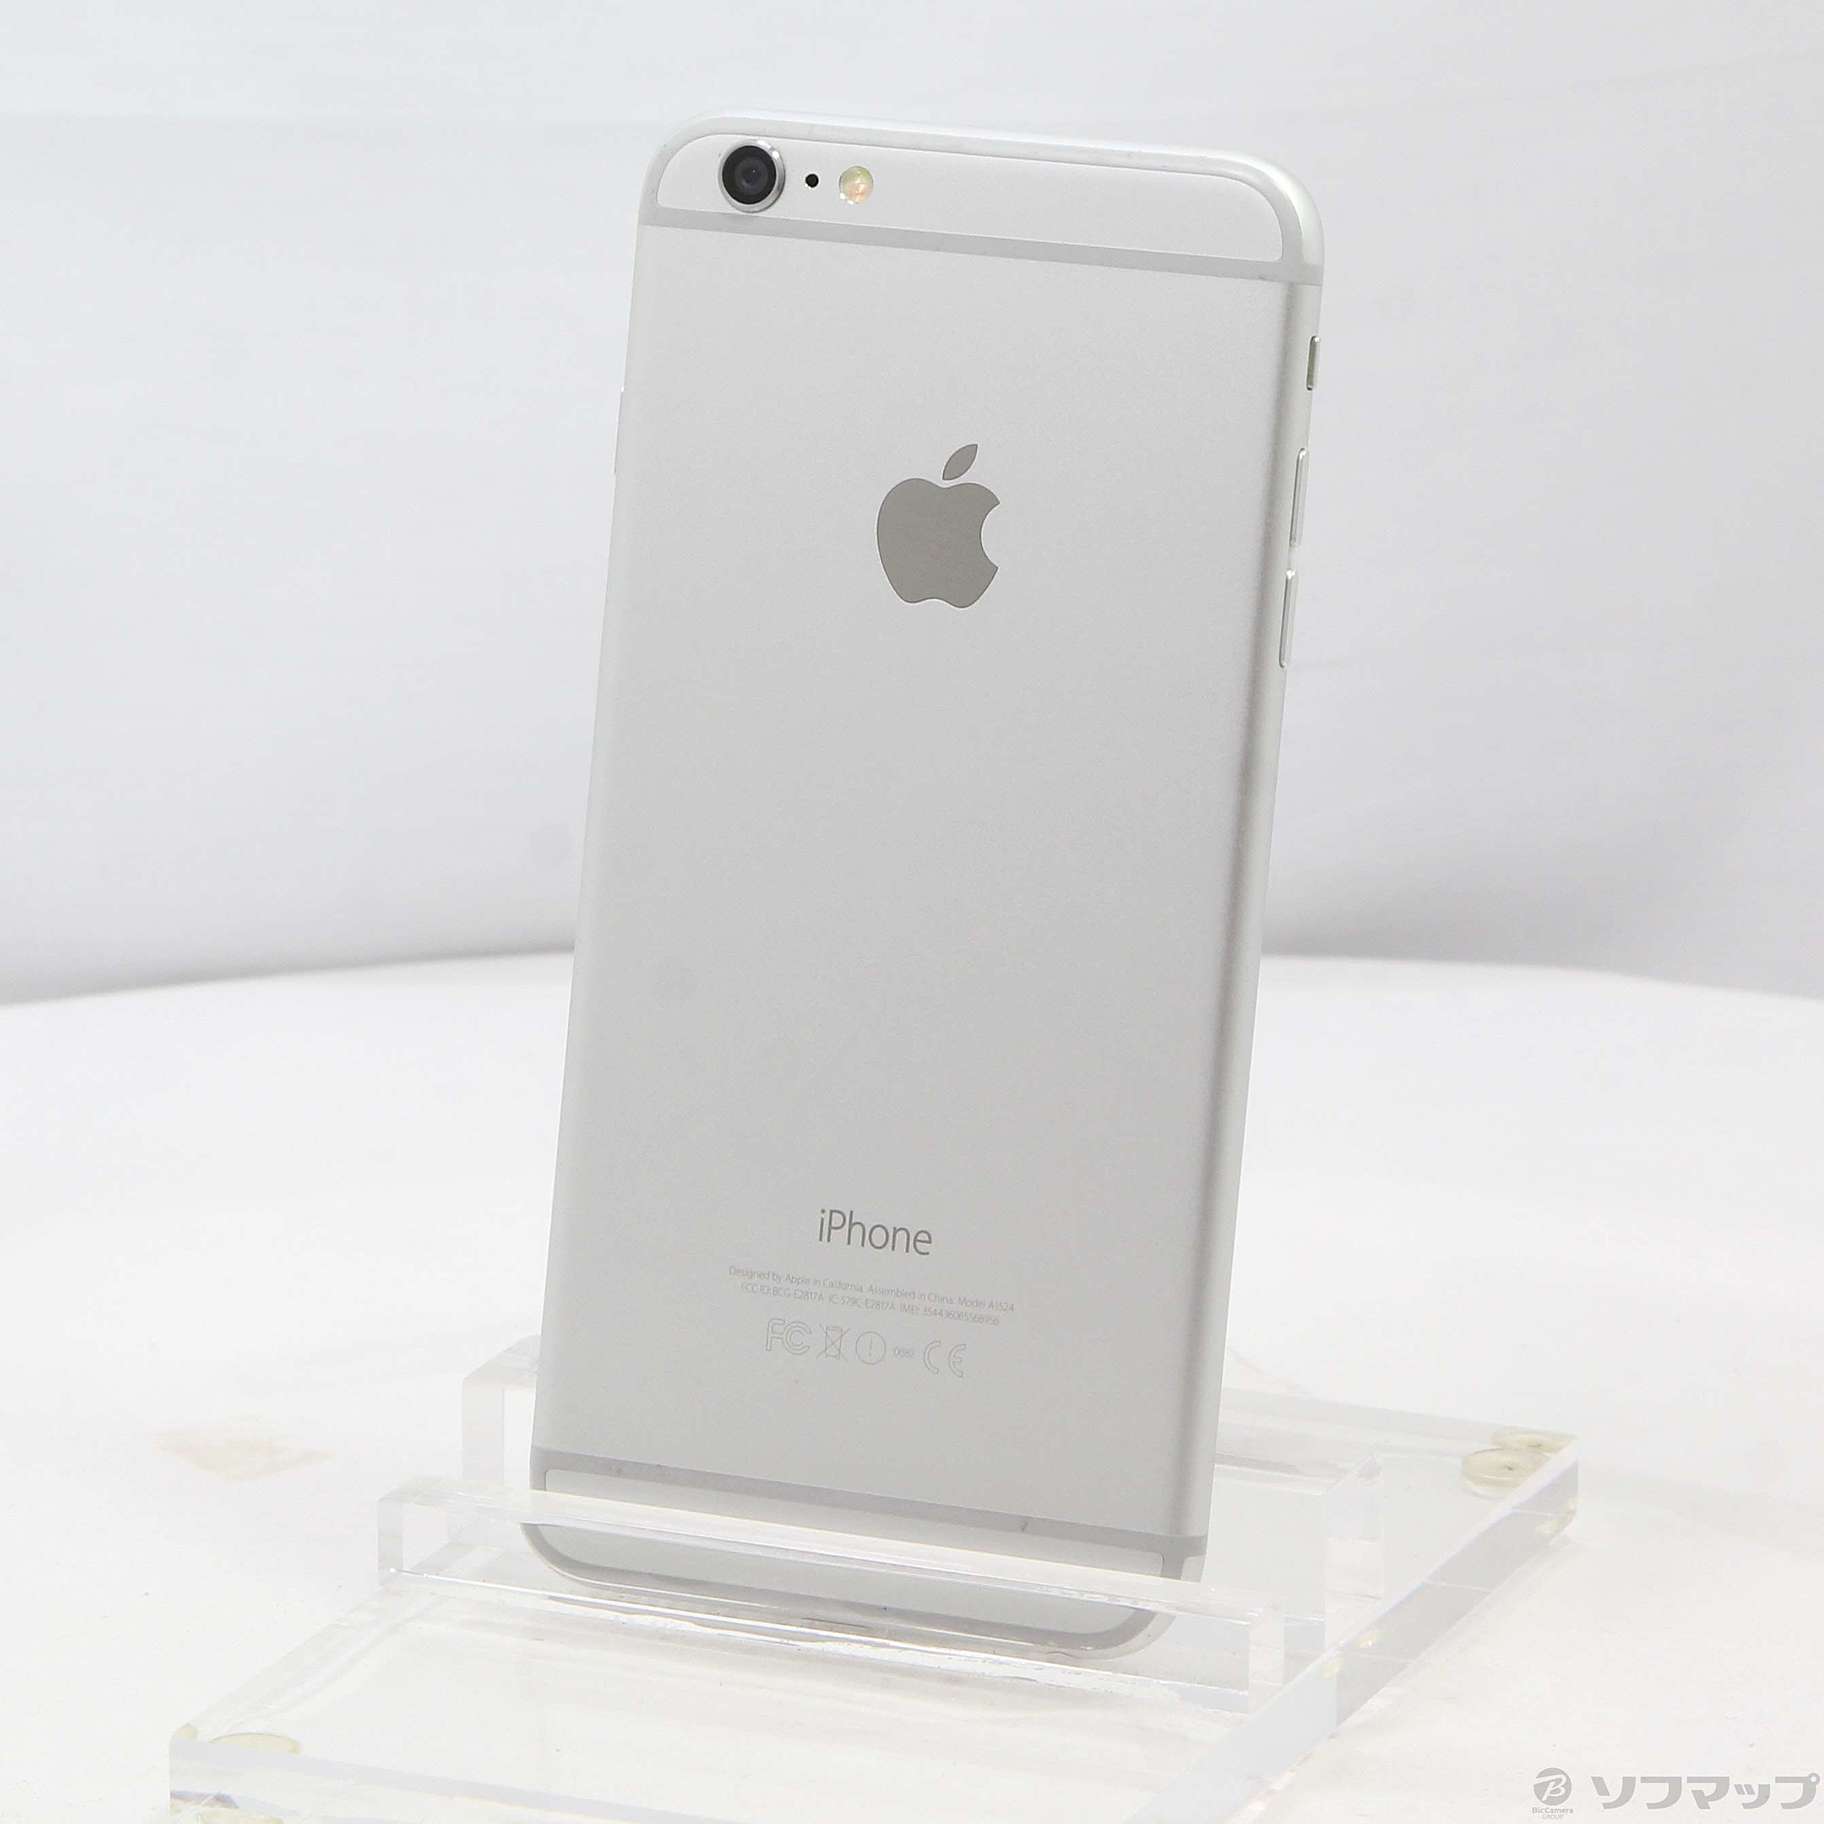 iPhone 6 Silver 64 GB Softbank - スマートフォン本体